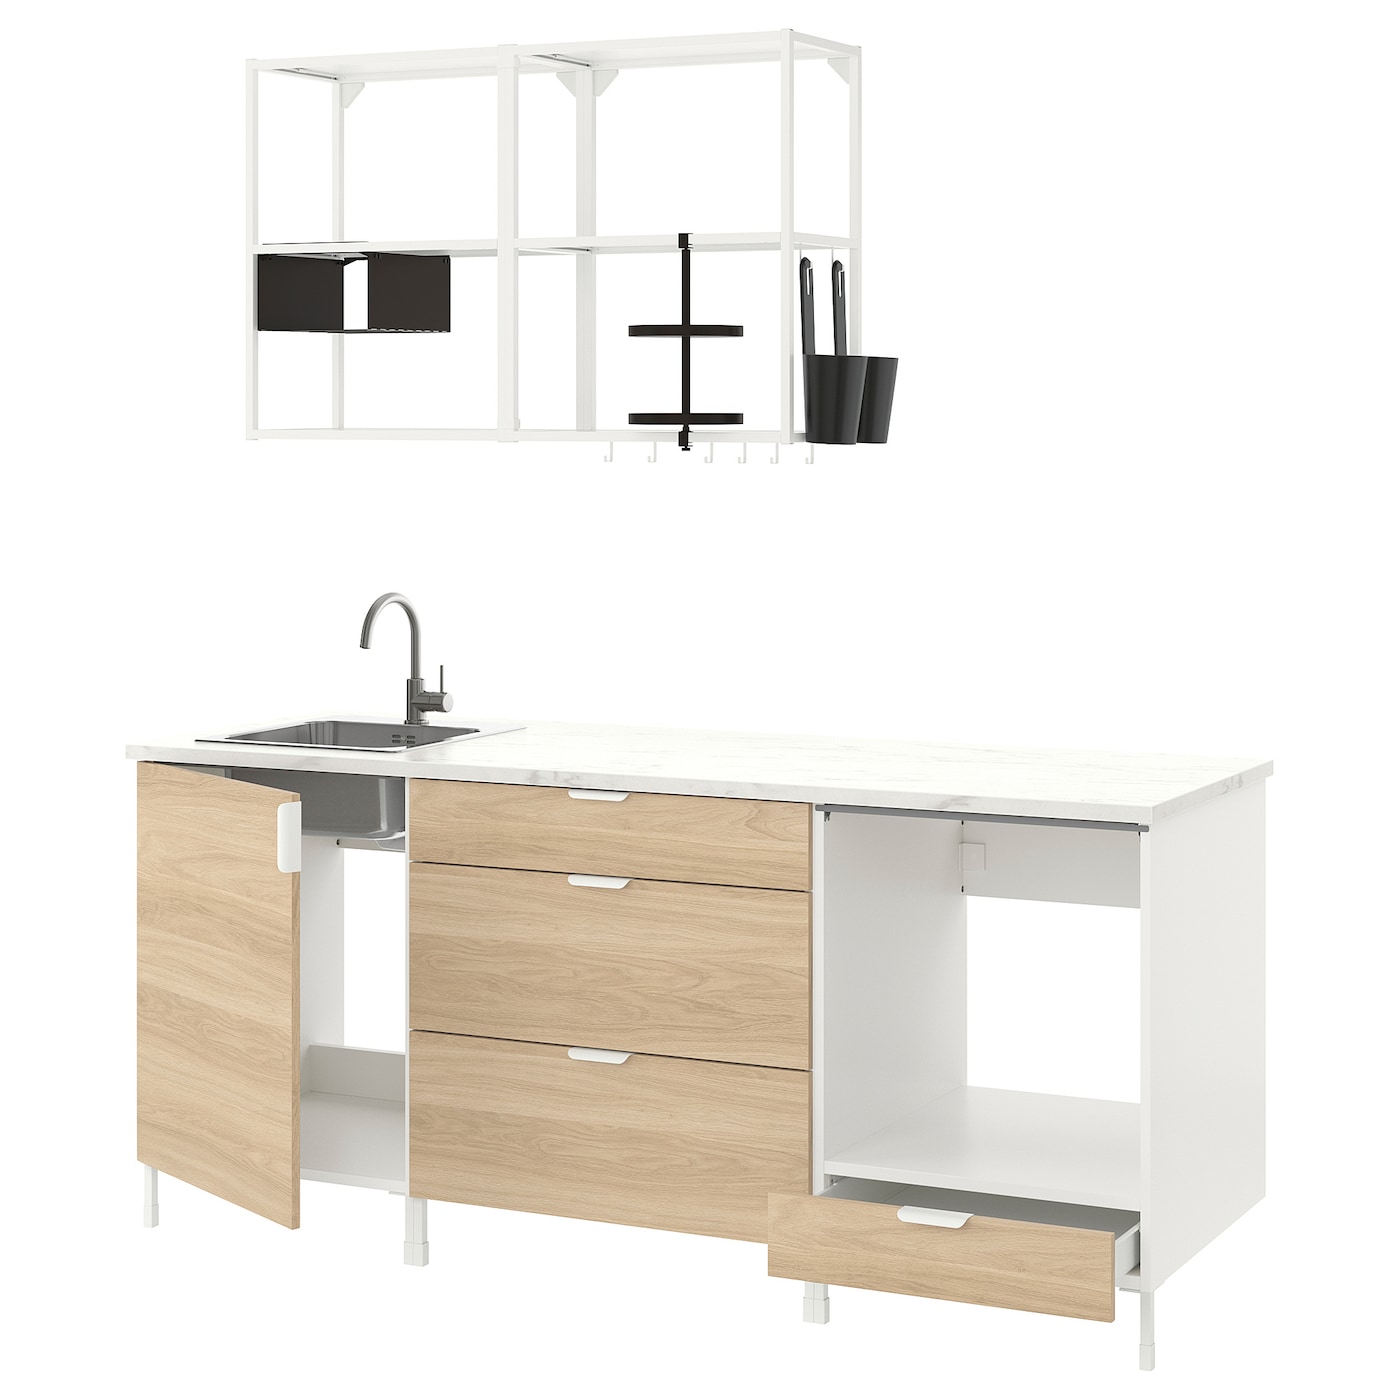 Комбинация для кухонного хранения  - ENHET  IKEA/ ЭНХЕТ ИКЕА, 203х63,5х222 см, белый/бежевый